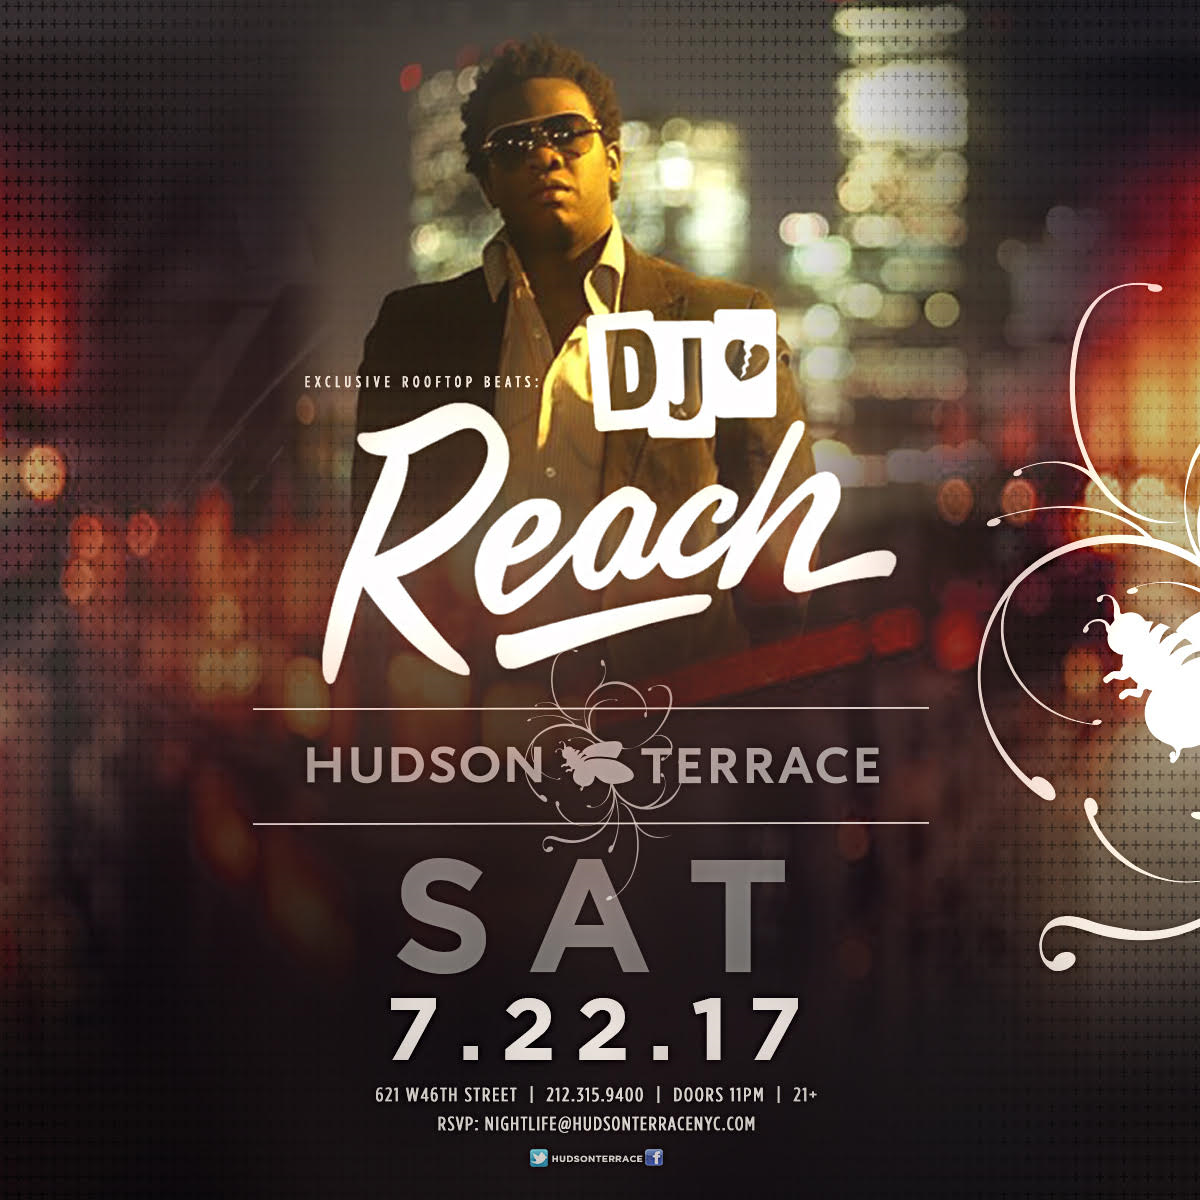 DJ Reach at Hudson Terrace 7/22